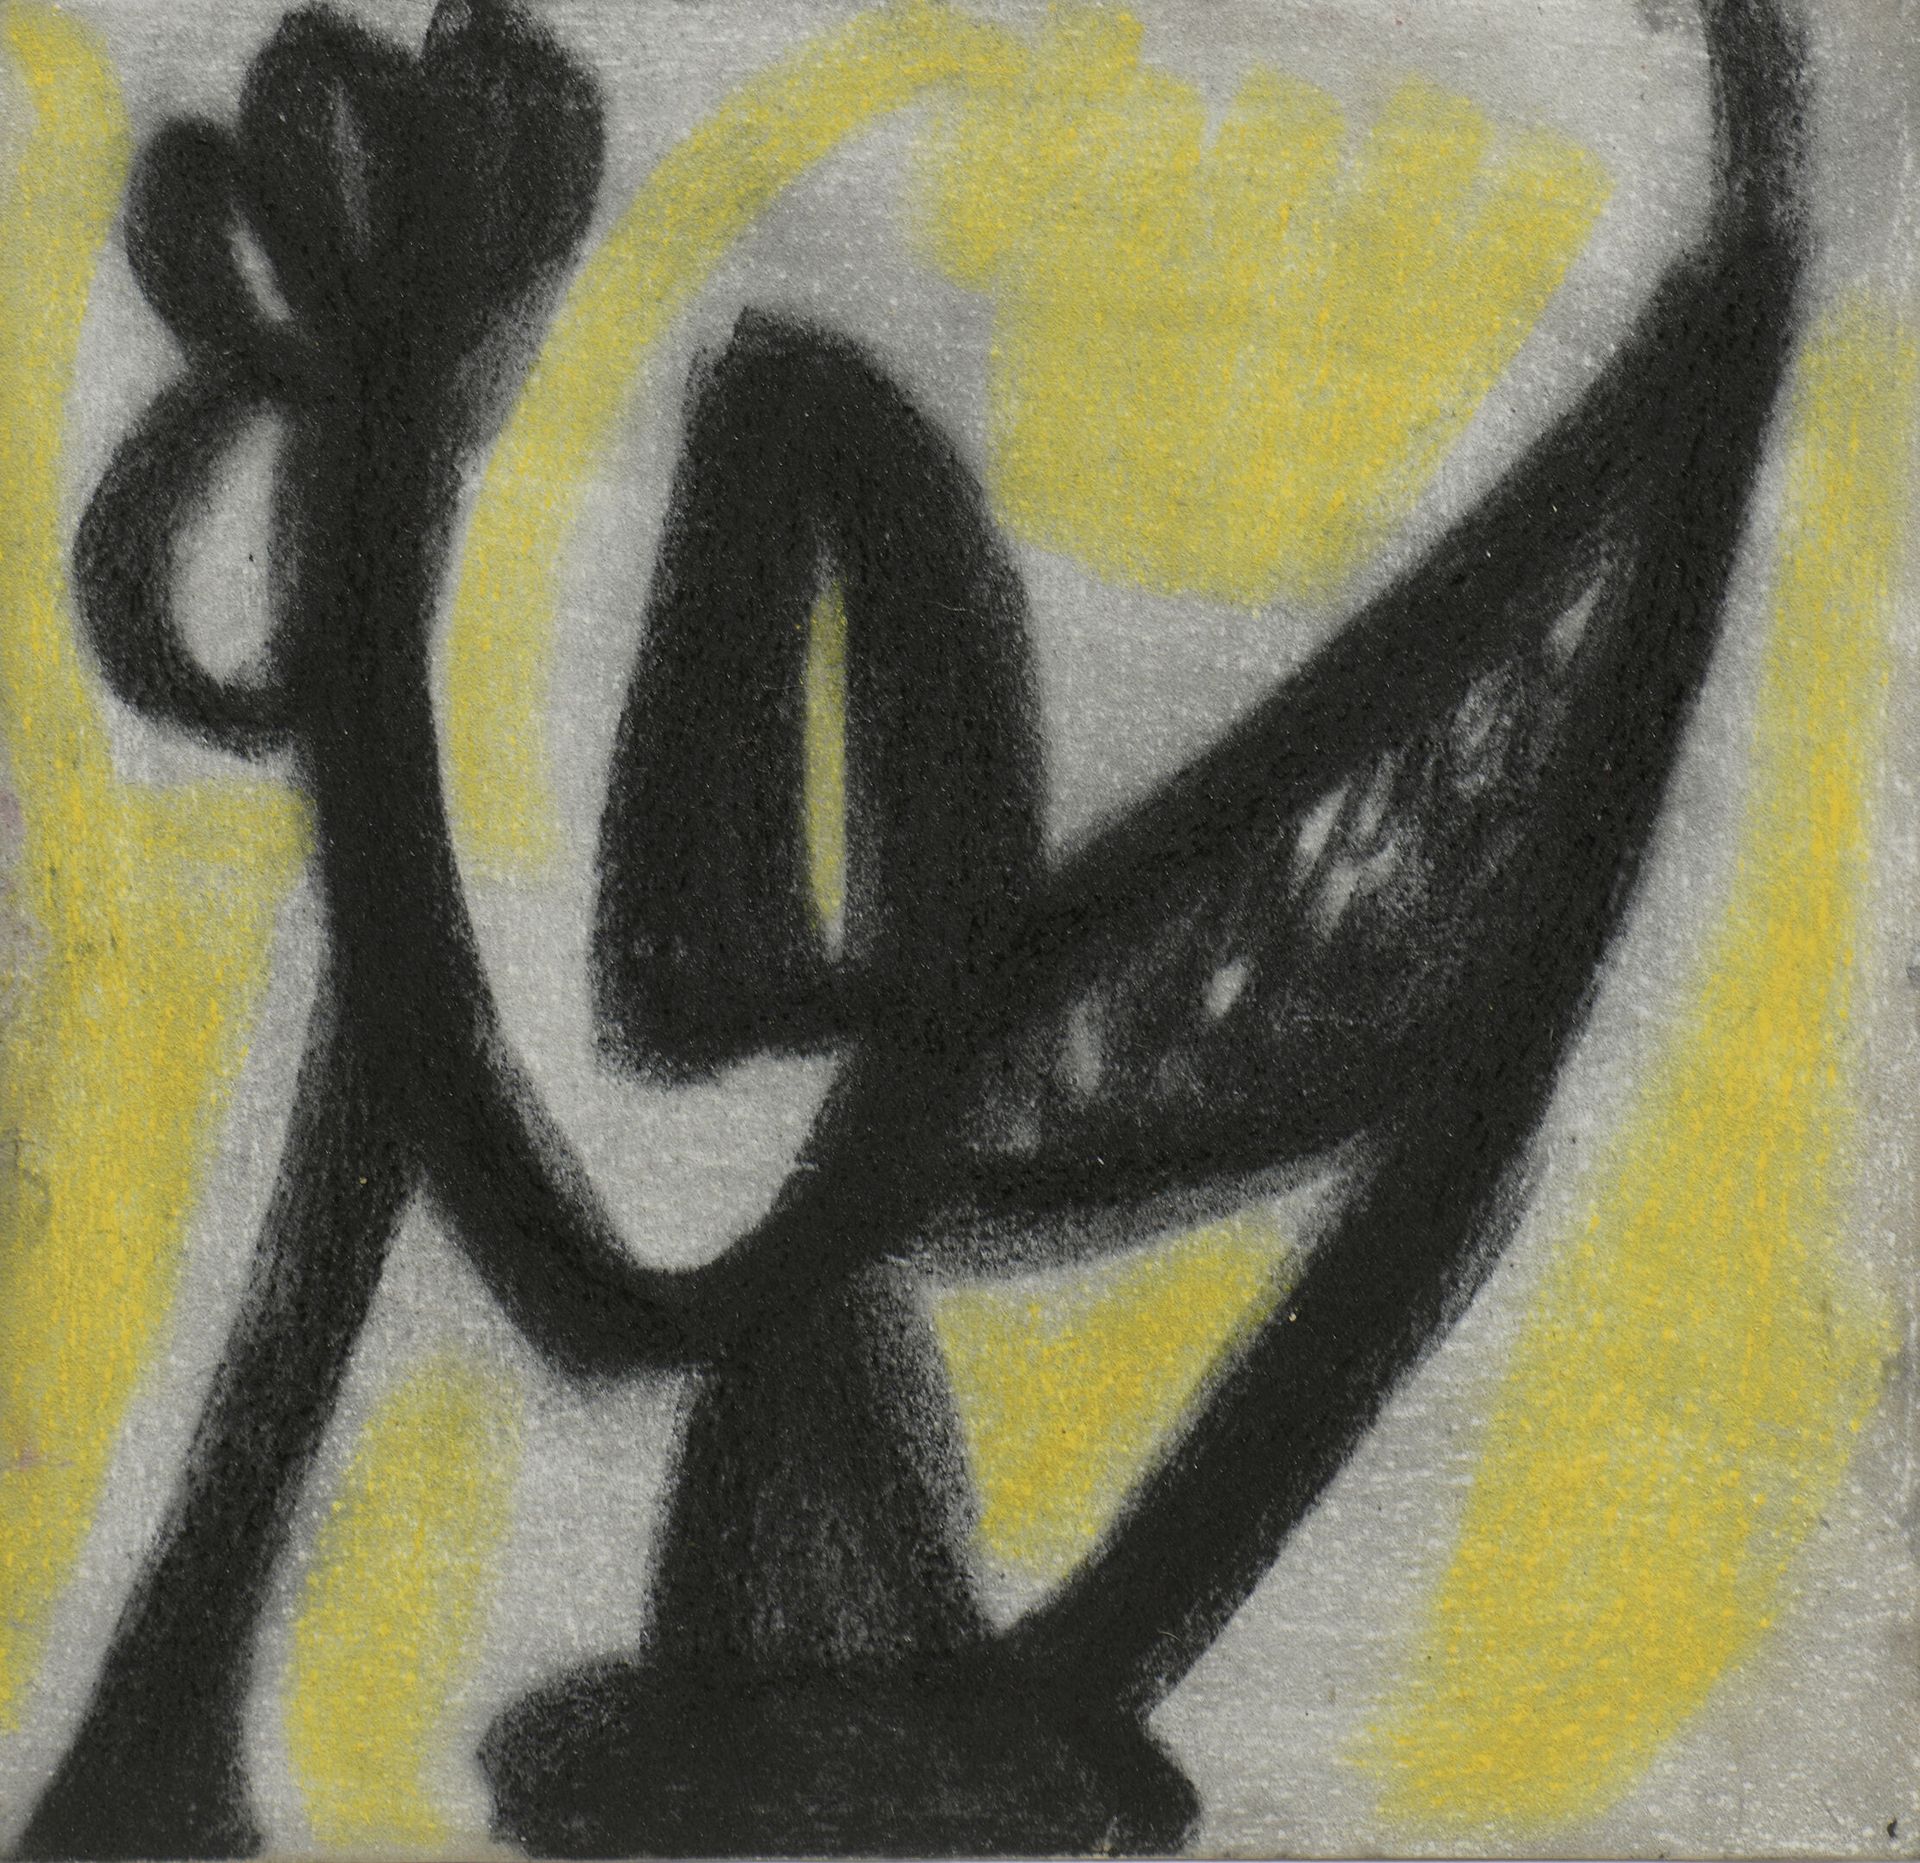 Null 让-米歇尔-阿特兰(1913-1960)

所罗门王的镜子》，1959年

粉彩画，无签名

H.24.7厘米 - 宽26厘米



出处 :

艺术&hellip;